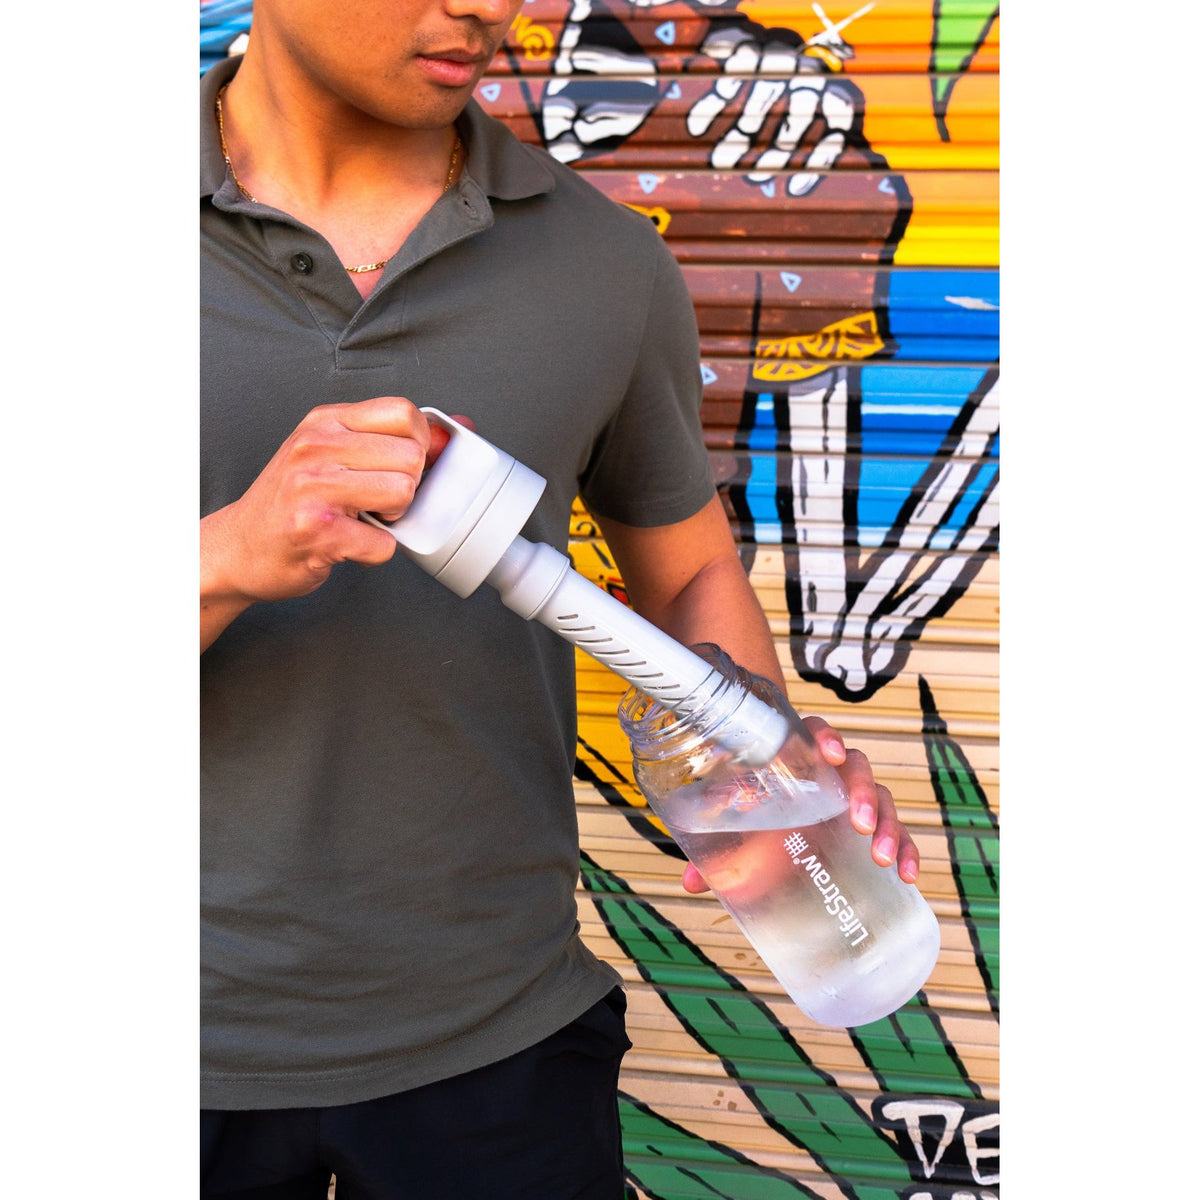 LifeStraw Go Tritan Renew 1L Filter Bottle - Polar White/Clear